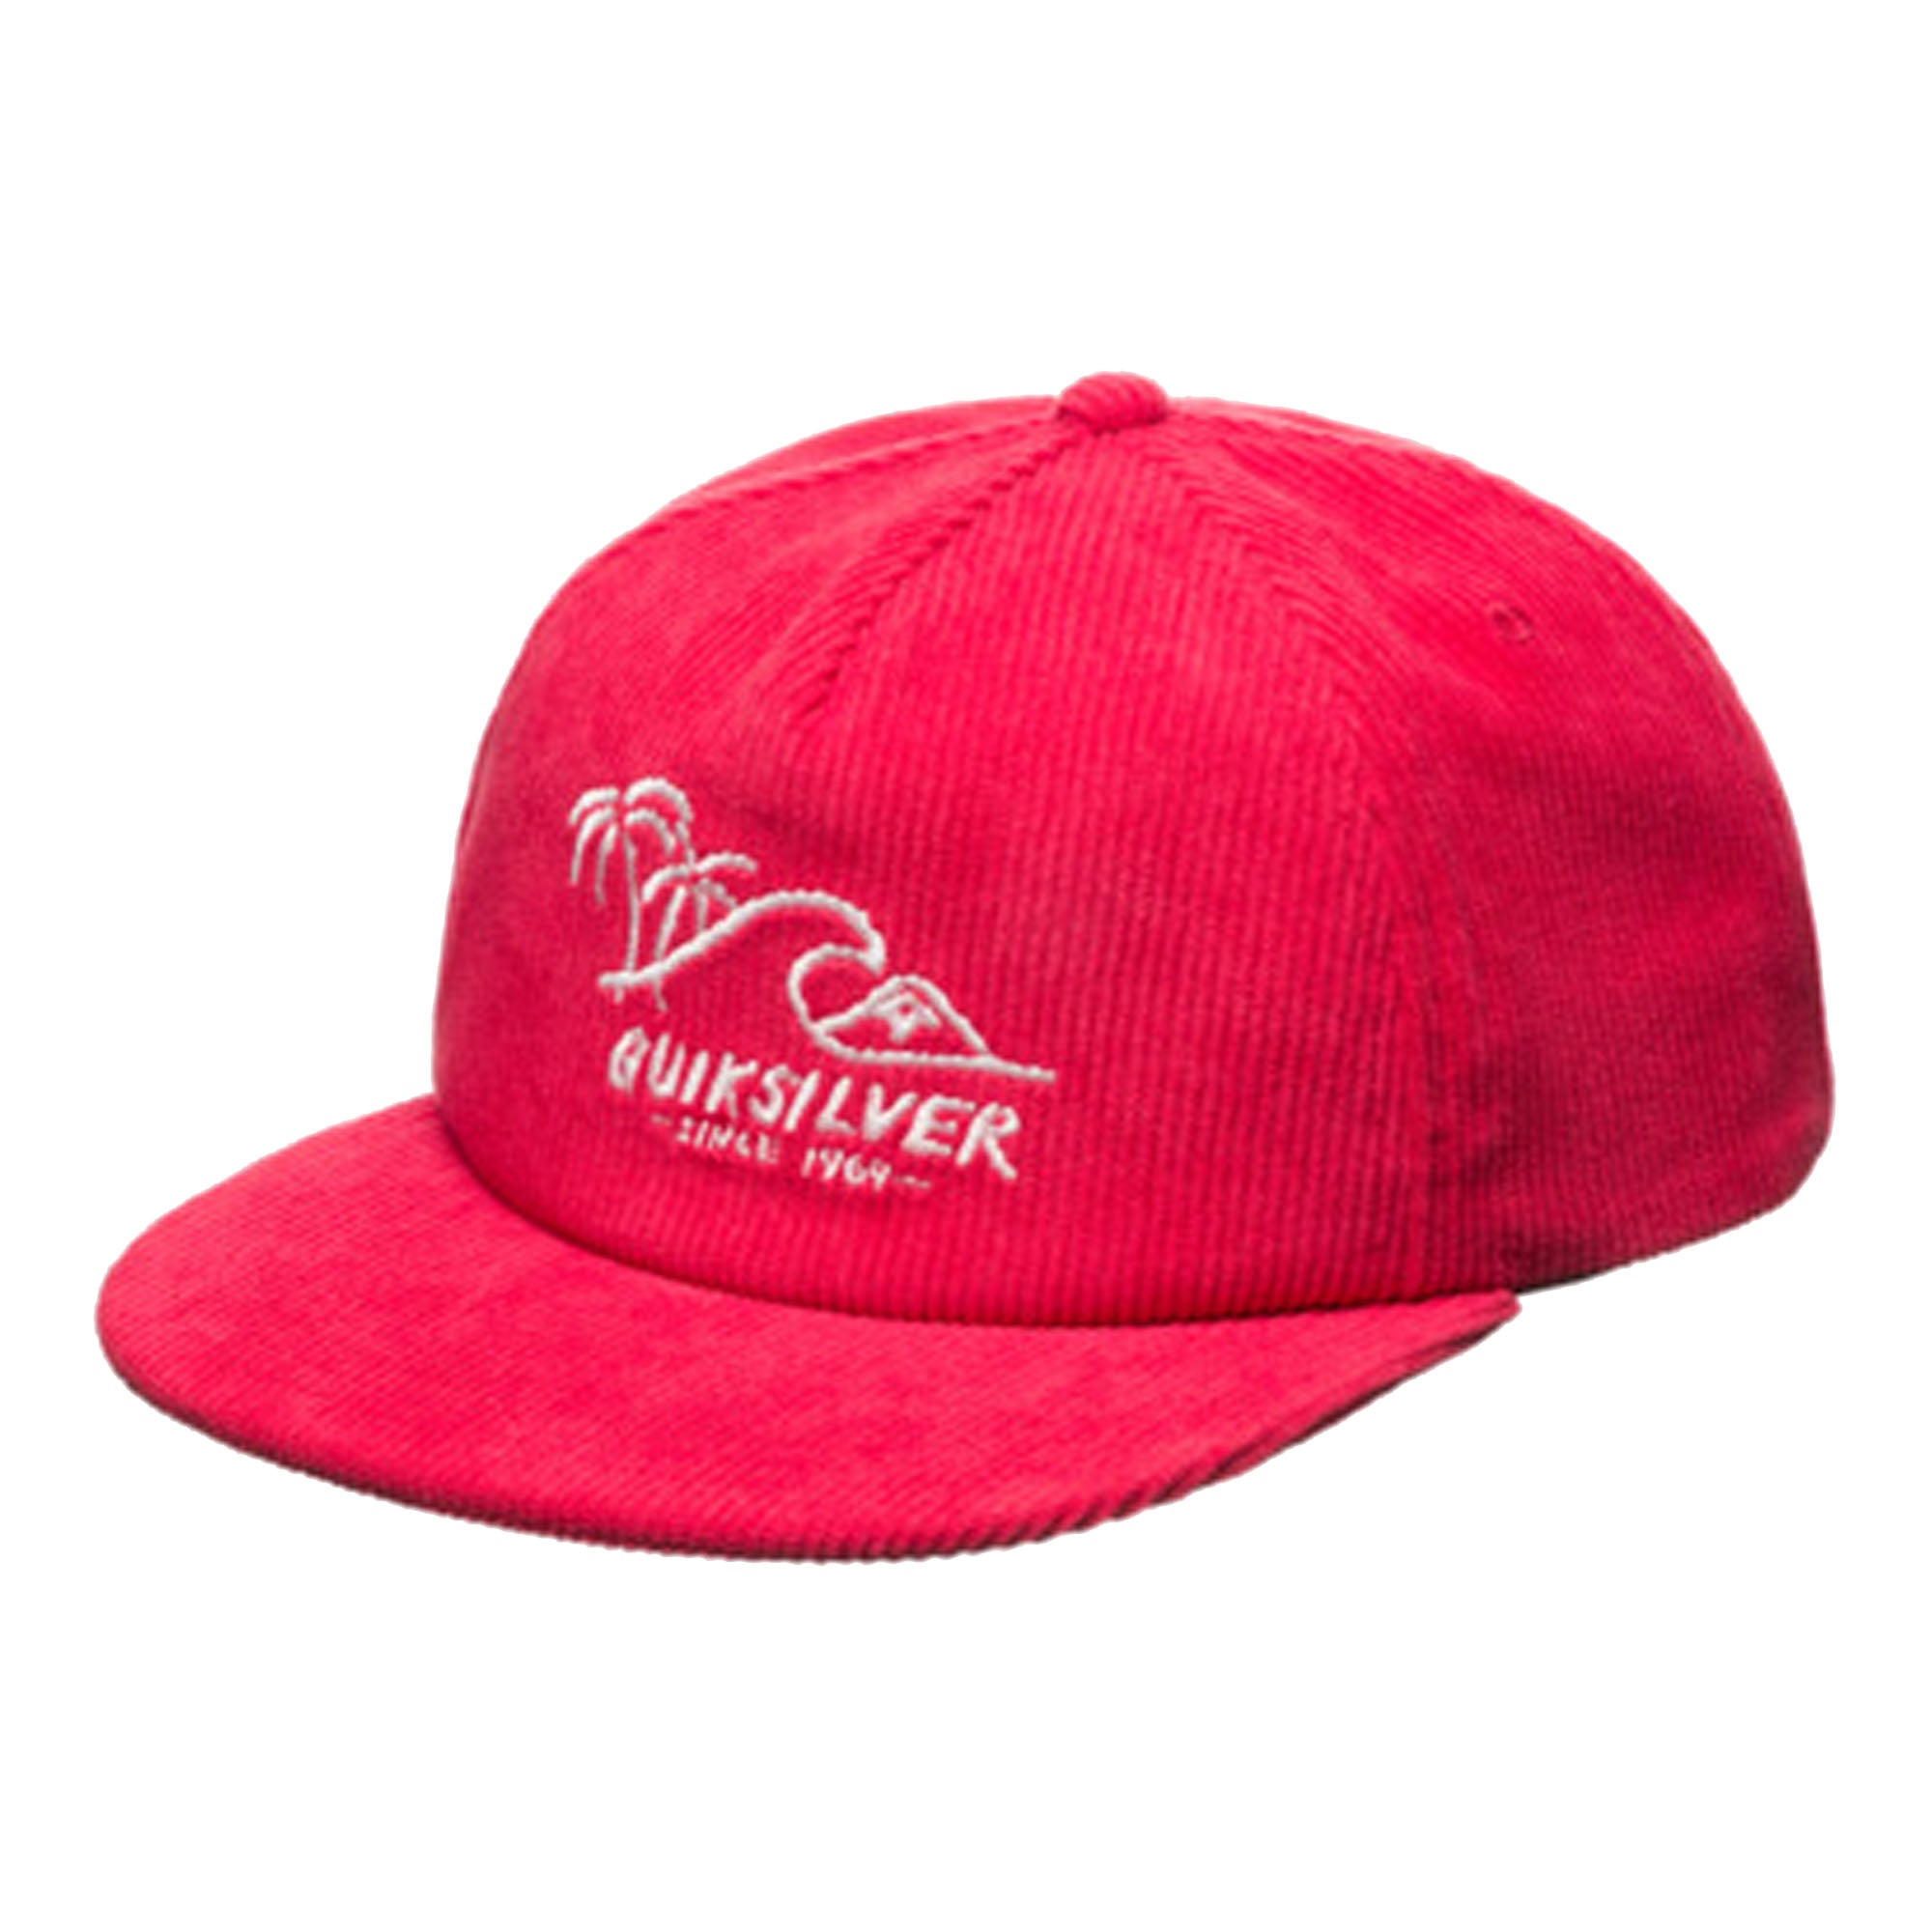 Quiksilver Cord Stretcher Men's Hat